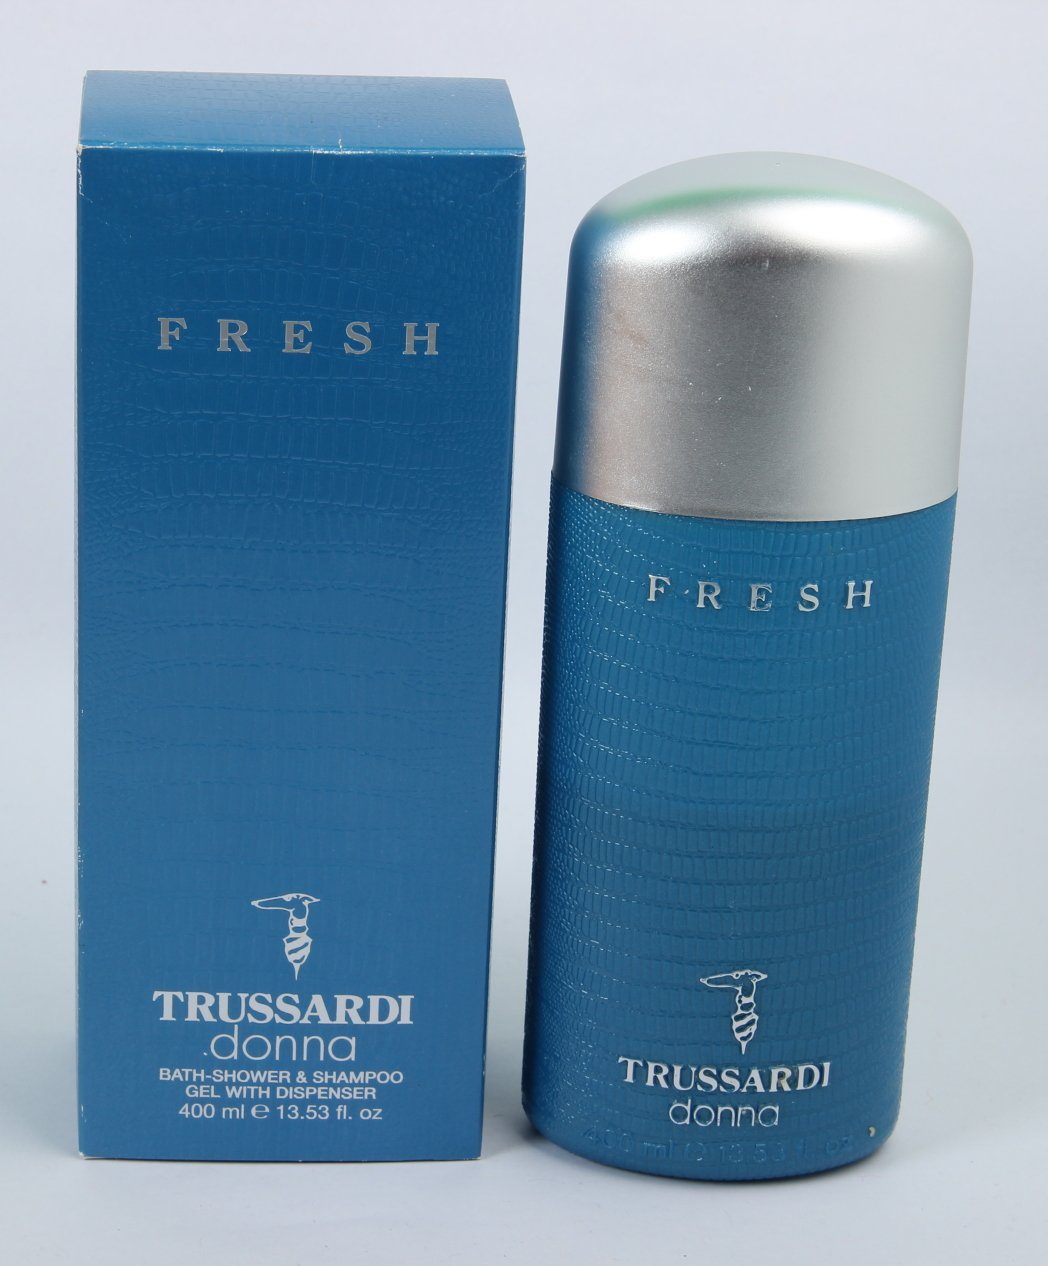 Trussardi Bath-SHower Duschgel Donna and SHampoo Fresh Gel 400ml Trussardi